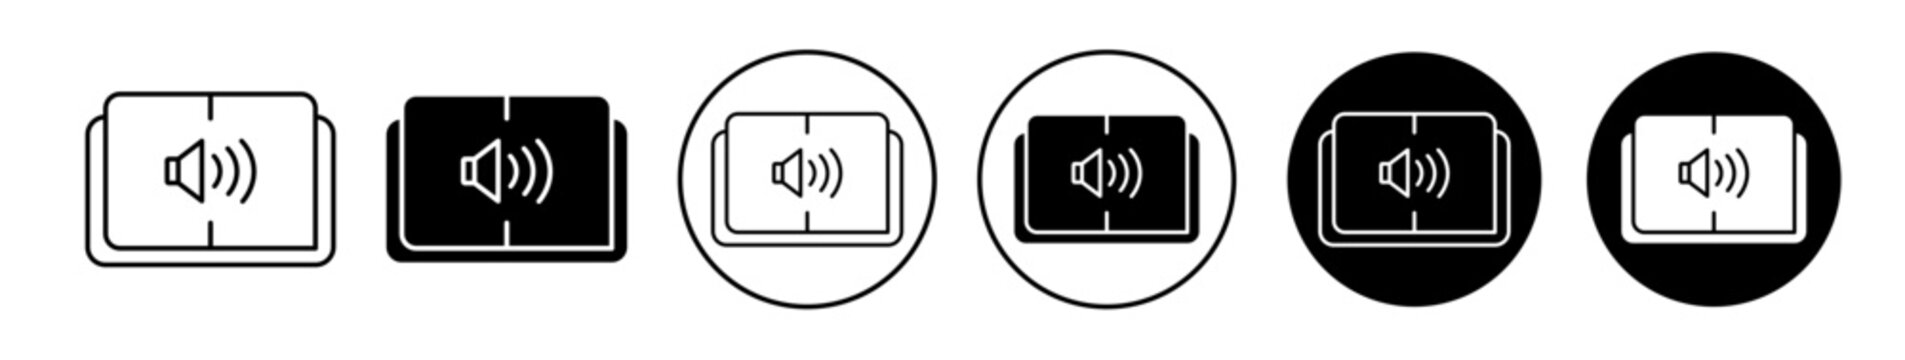 audio book icon set. vector symbol illustration.